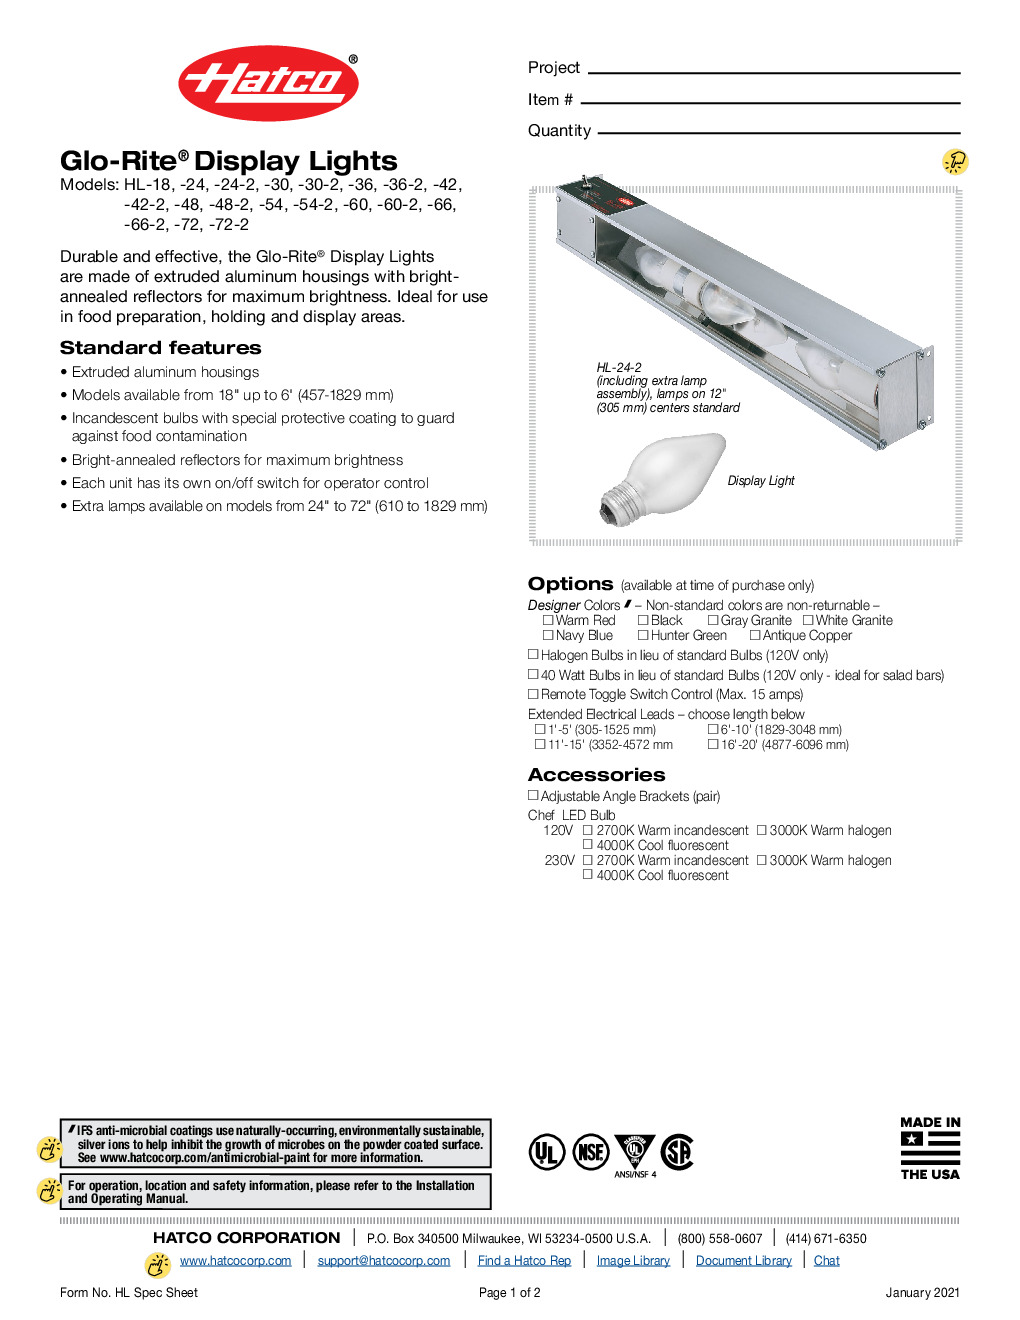 Hatco HL-24-120-QS for Display Light Fixture